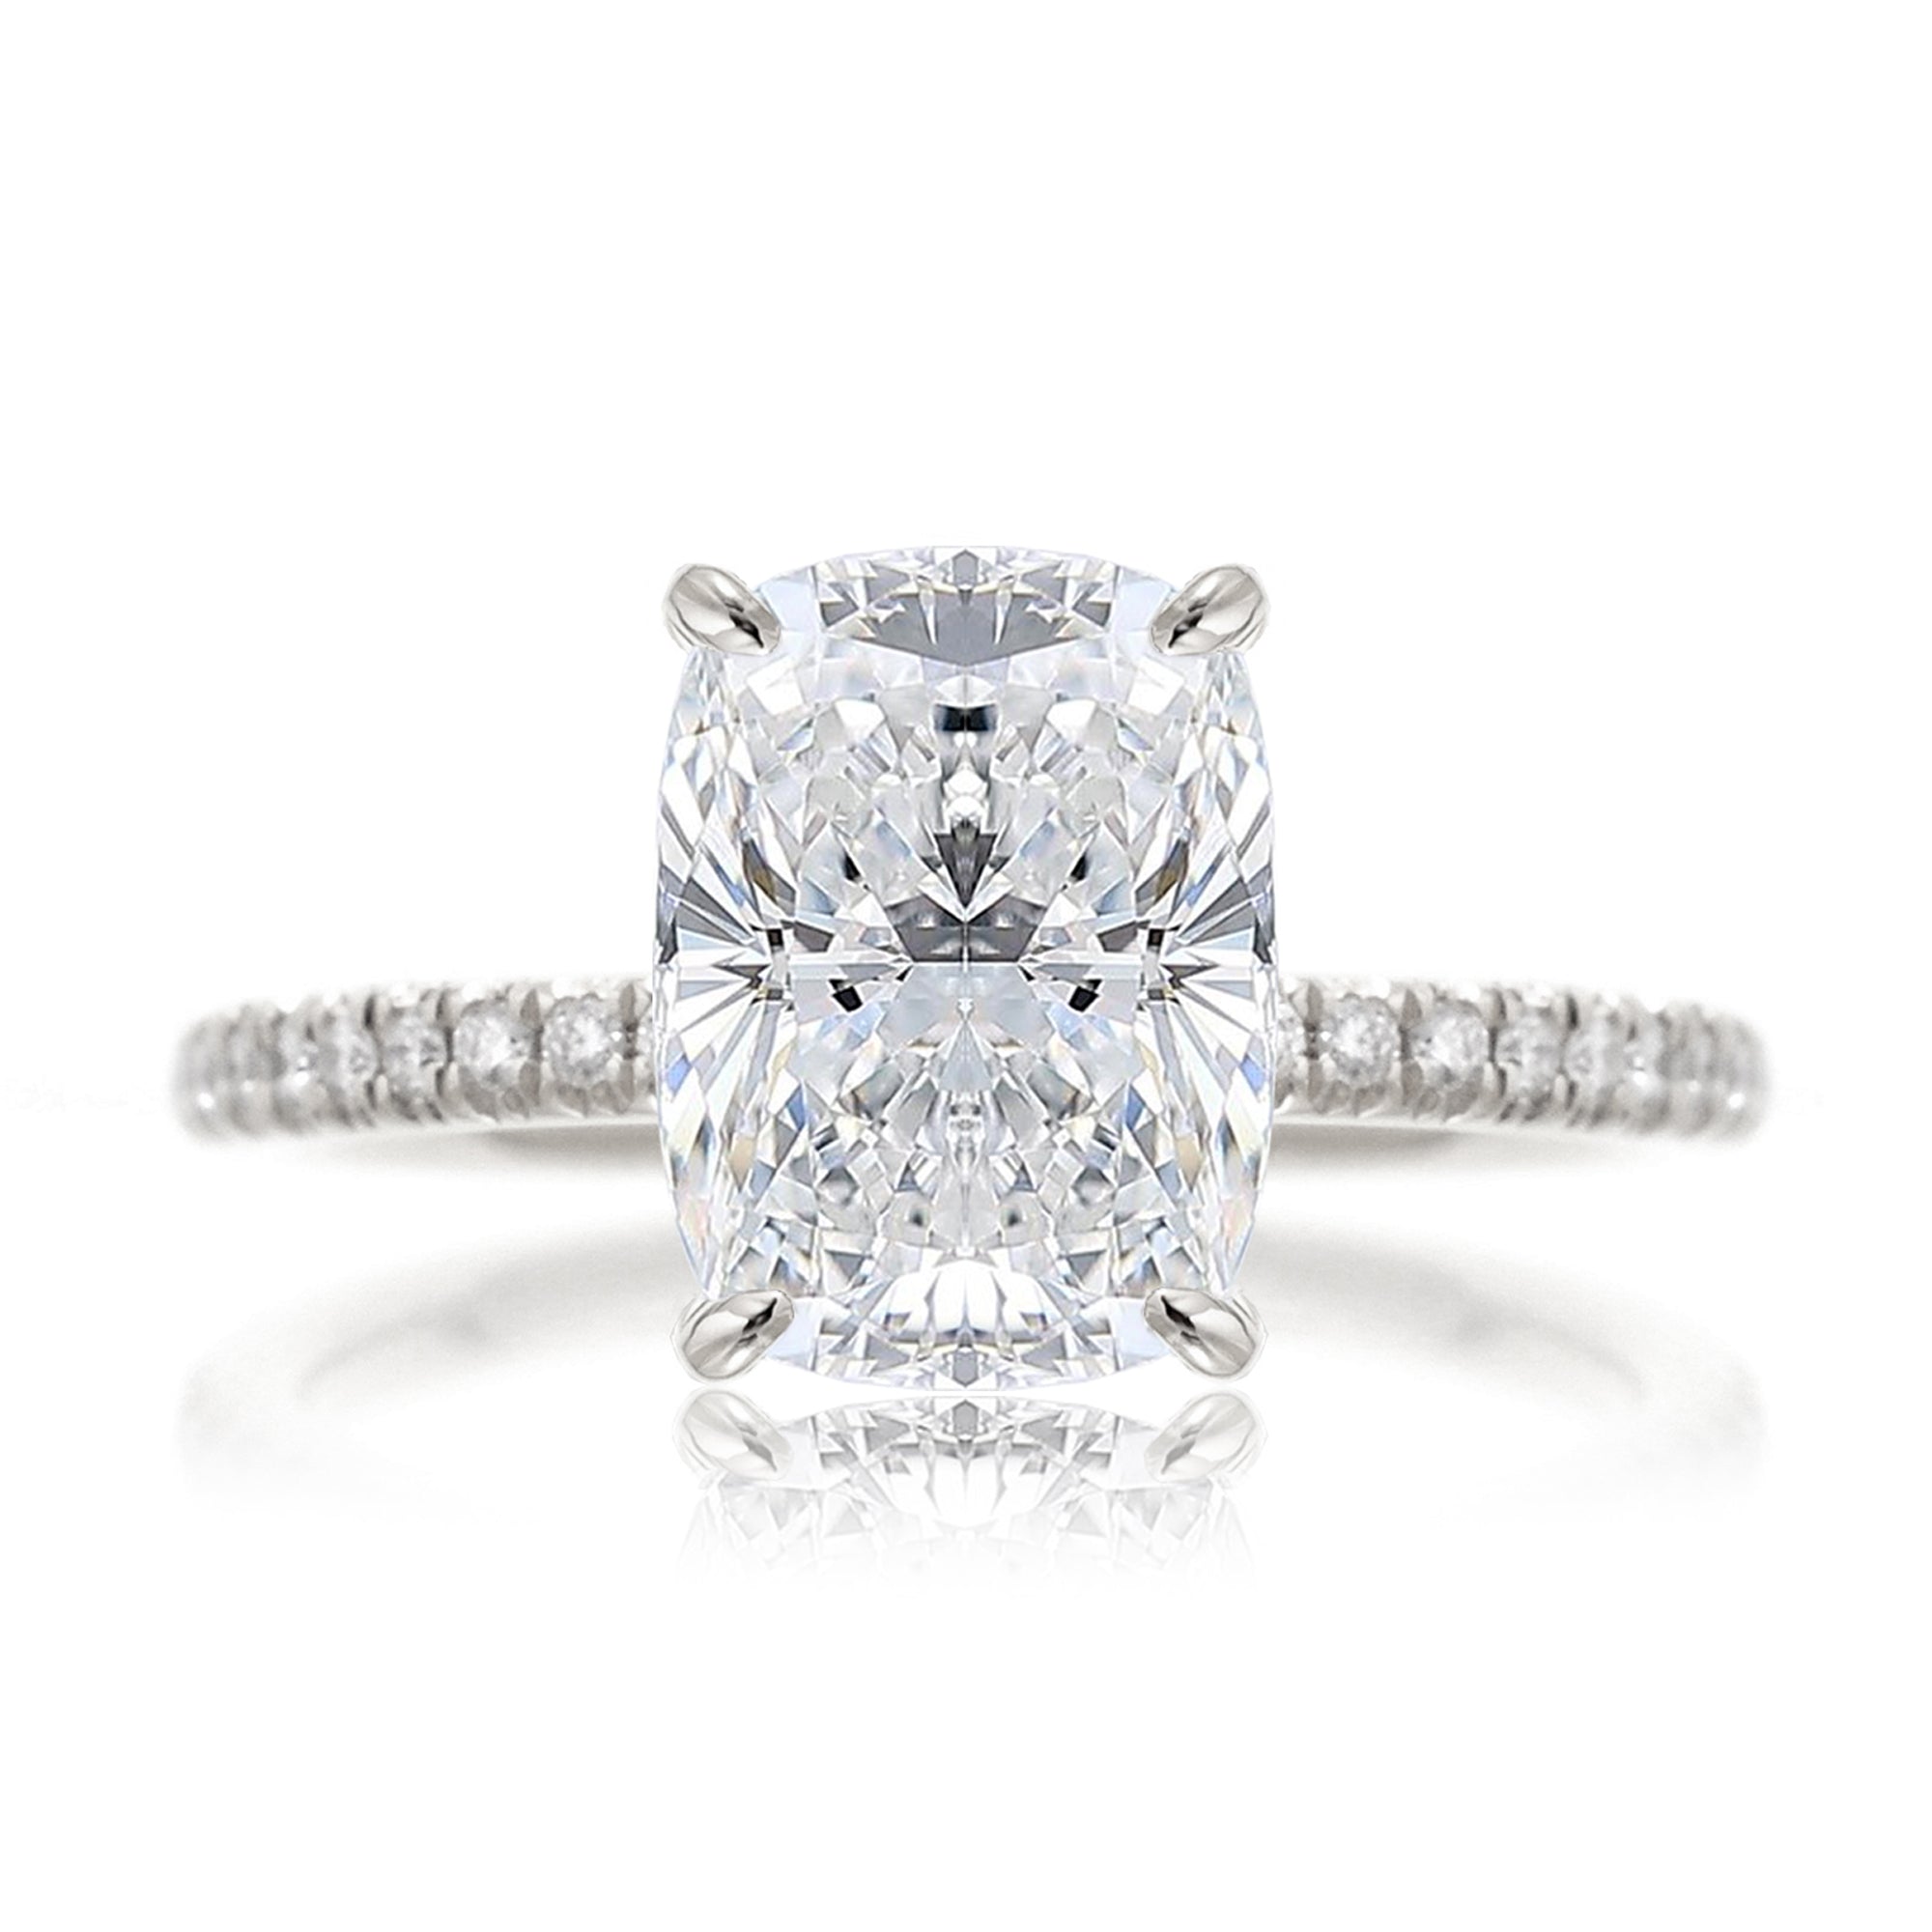 Cushion cut lab-grown diamond engagement ring white gold - The Ava